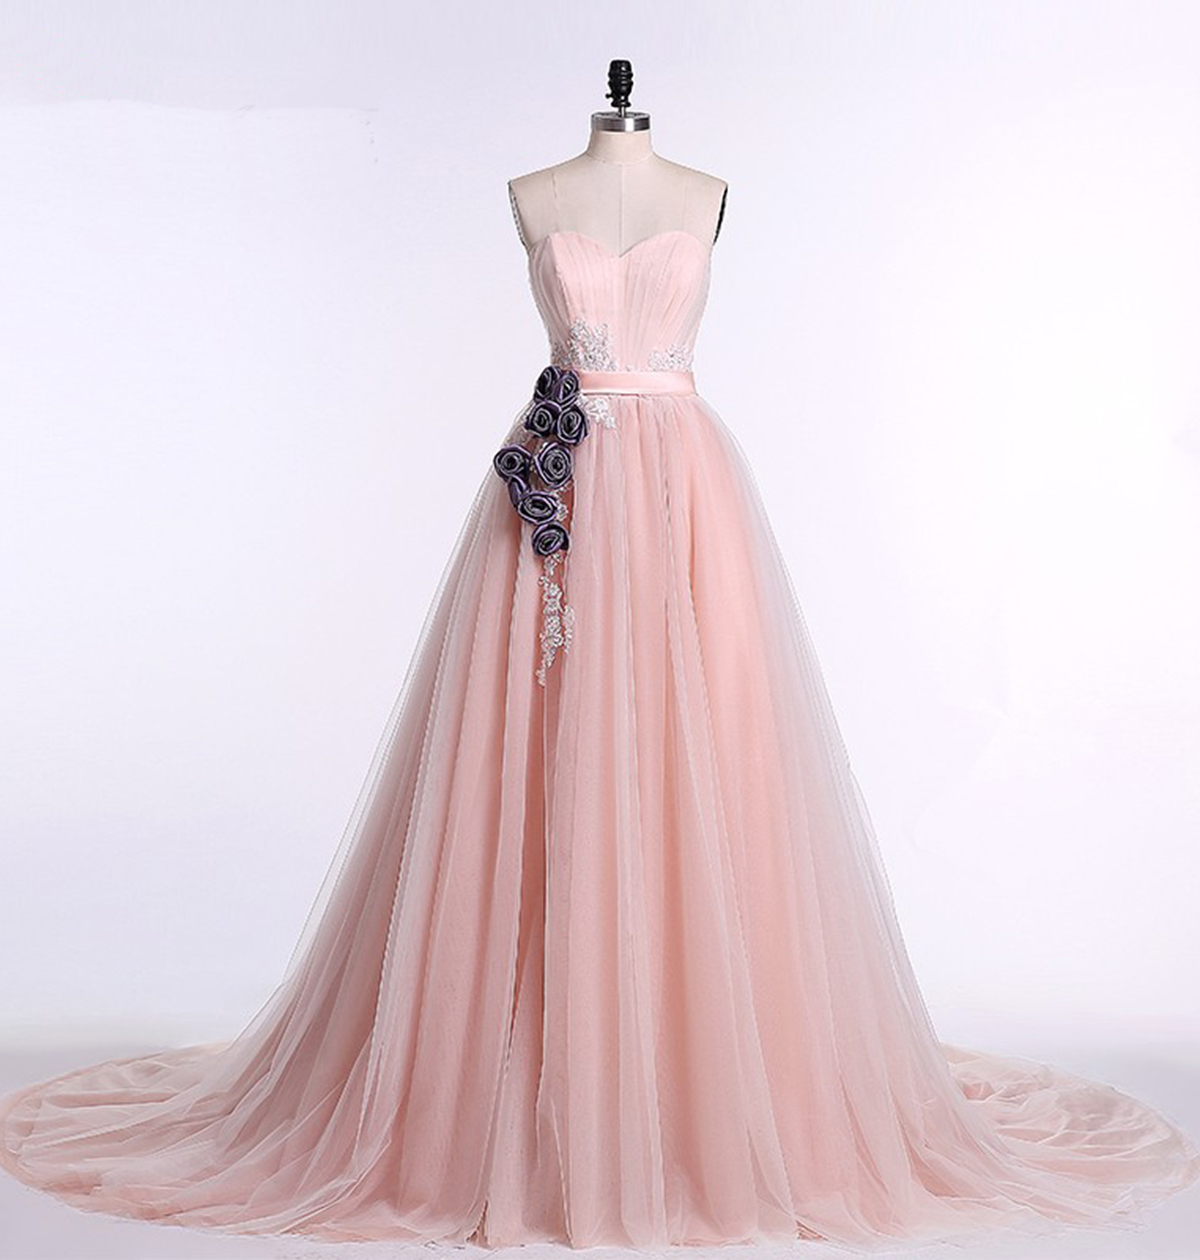 Elegant A-line Off Shoulder Lace Applique Tulle Formal Prom Dress, Beautiful Long Prom Dress, Banquet Party Dress